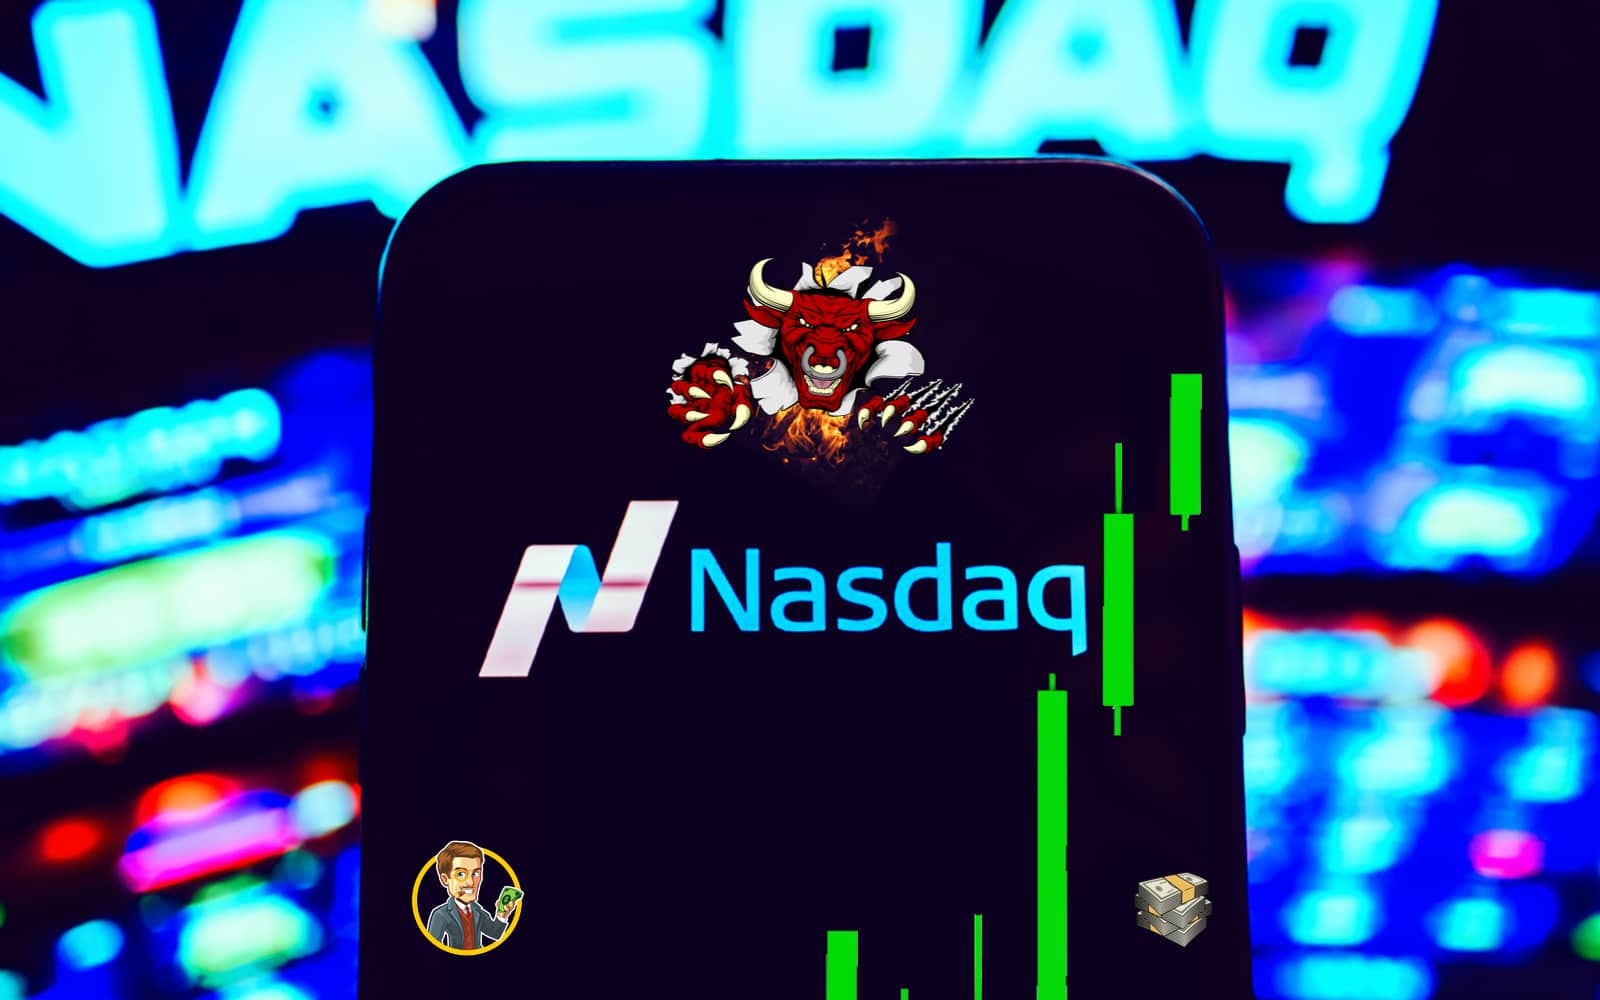 NASDAQ performance this year